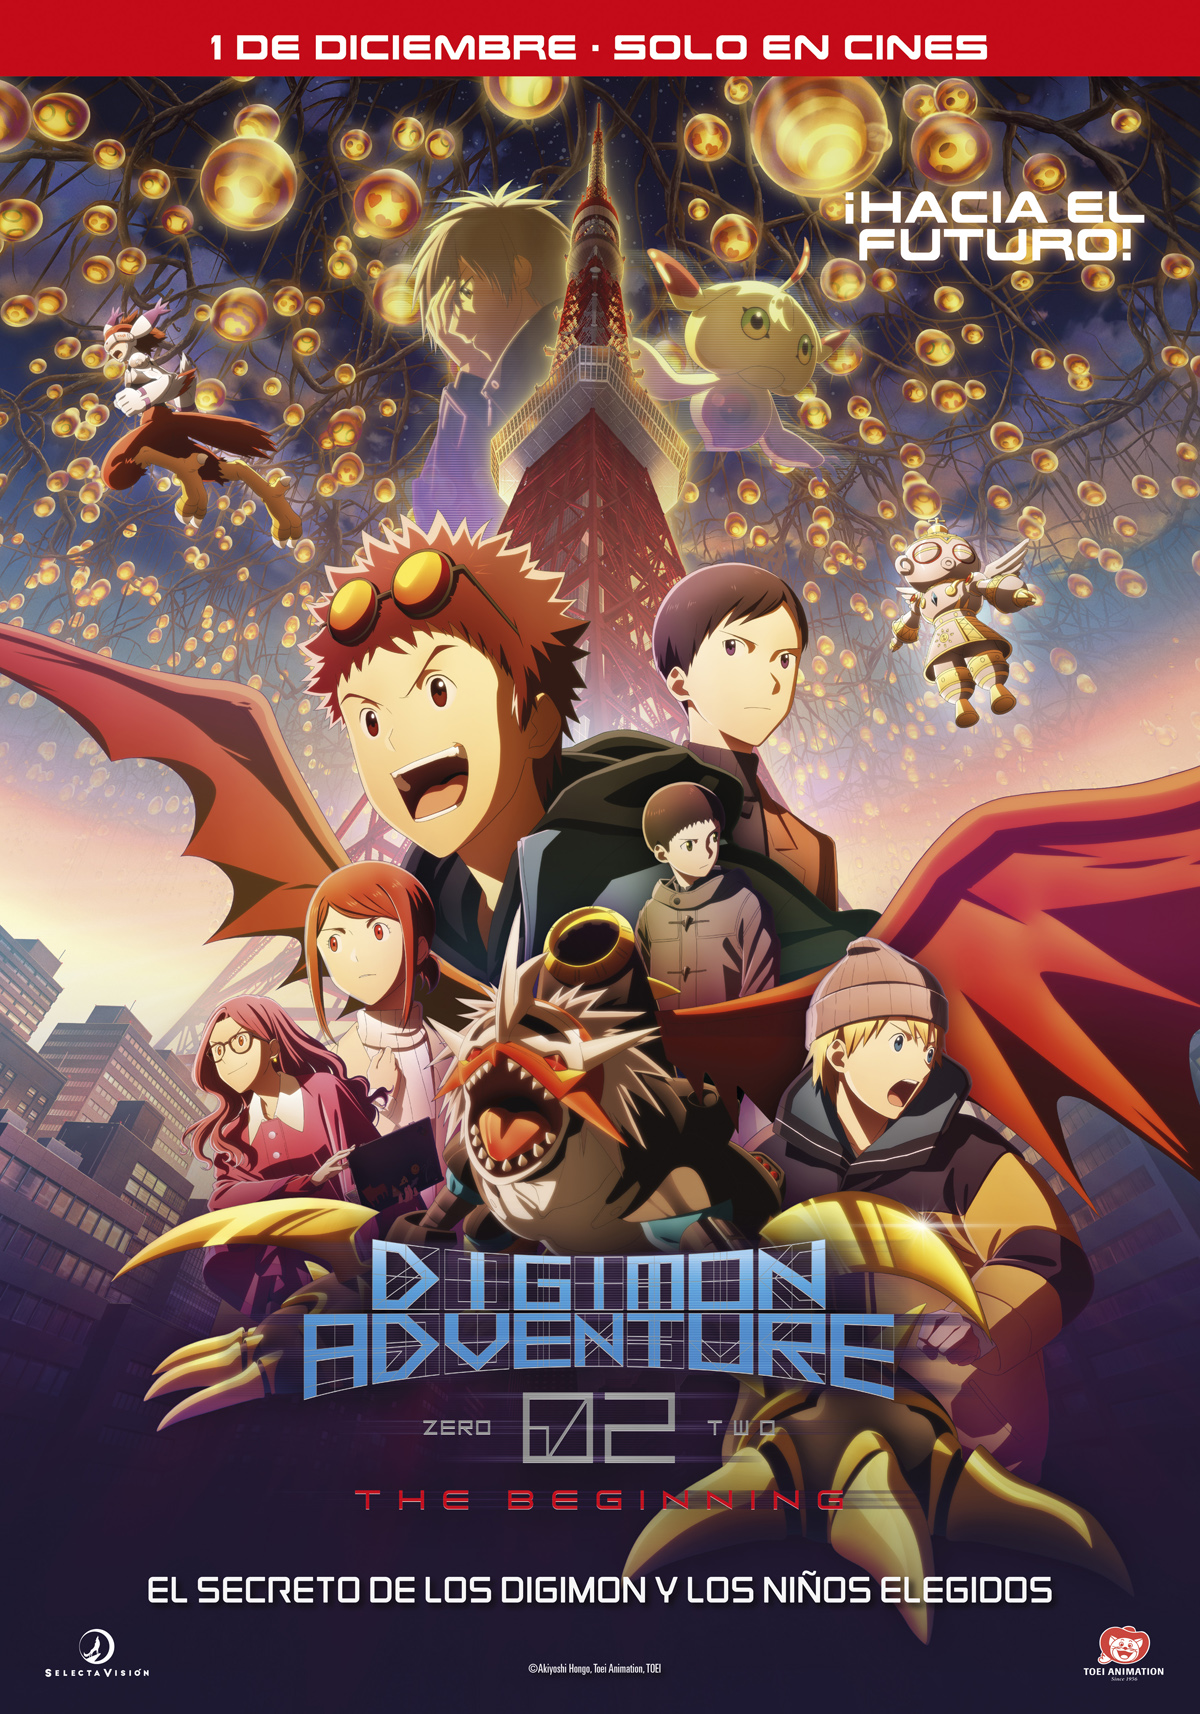 Ficha, tráiler y póster de Digimon Adventure 02: The Beginning